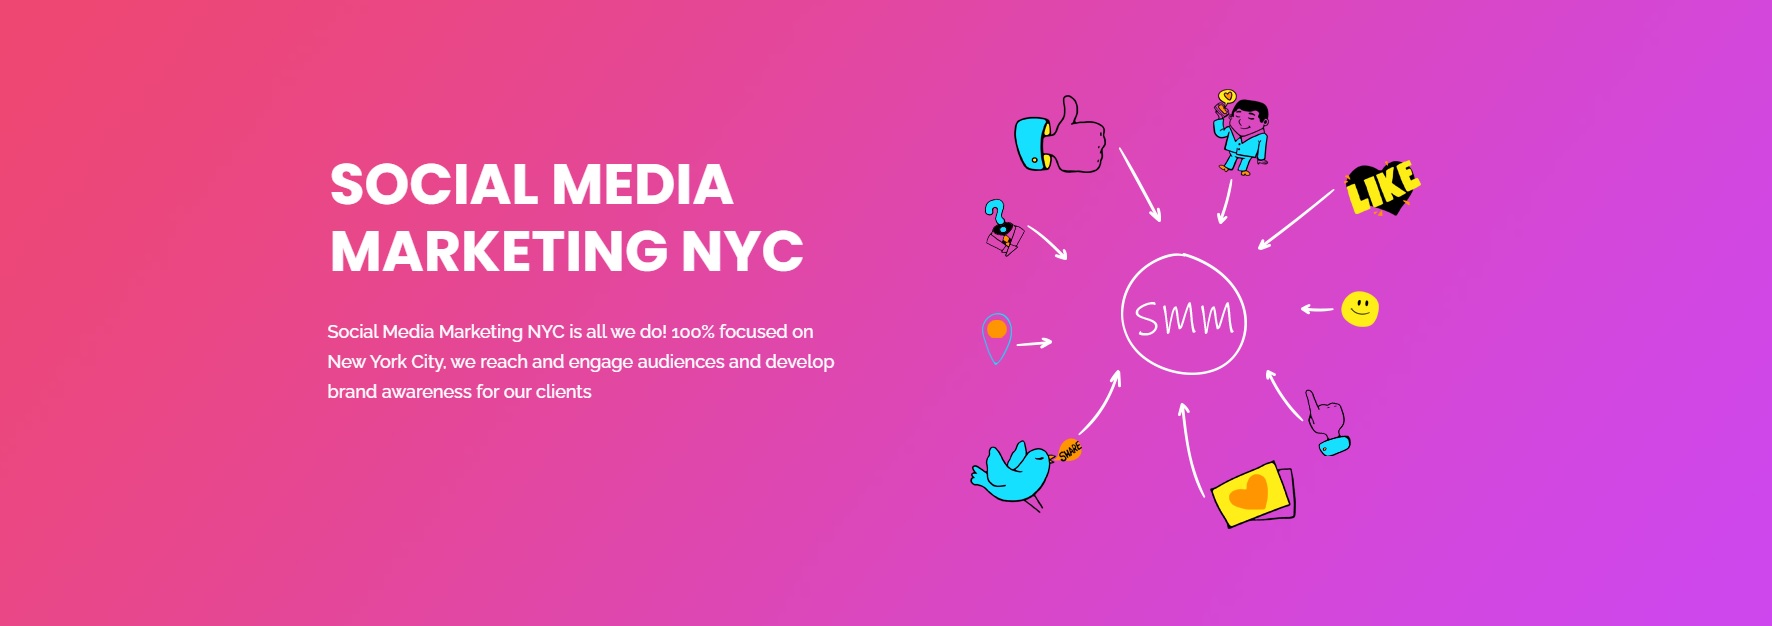 Social Media Marketing NYC - SMM Agency